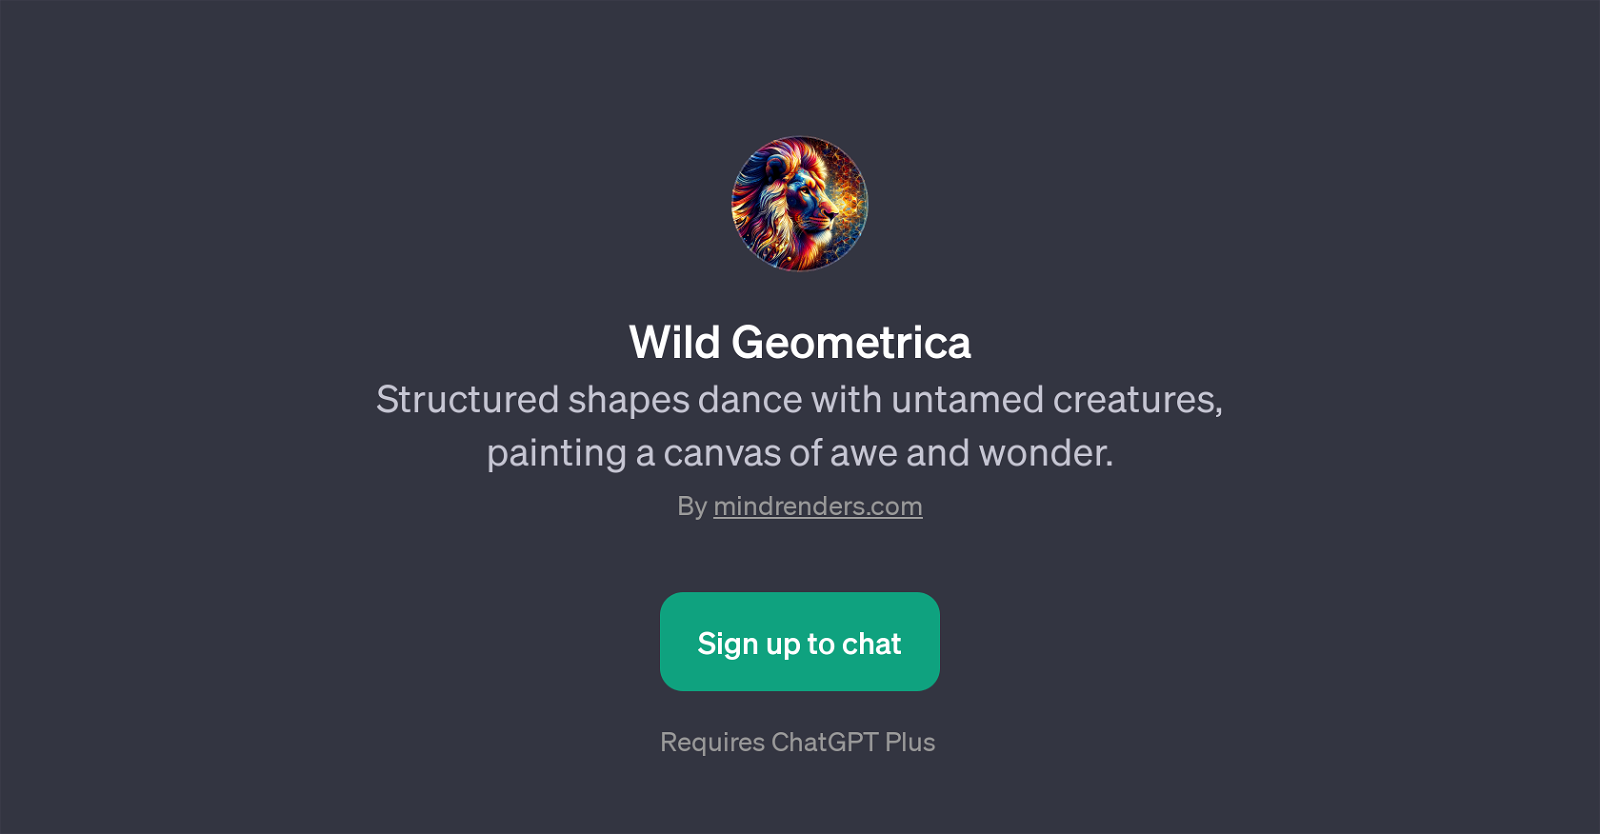 Wild Geometrica website